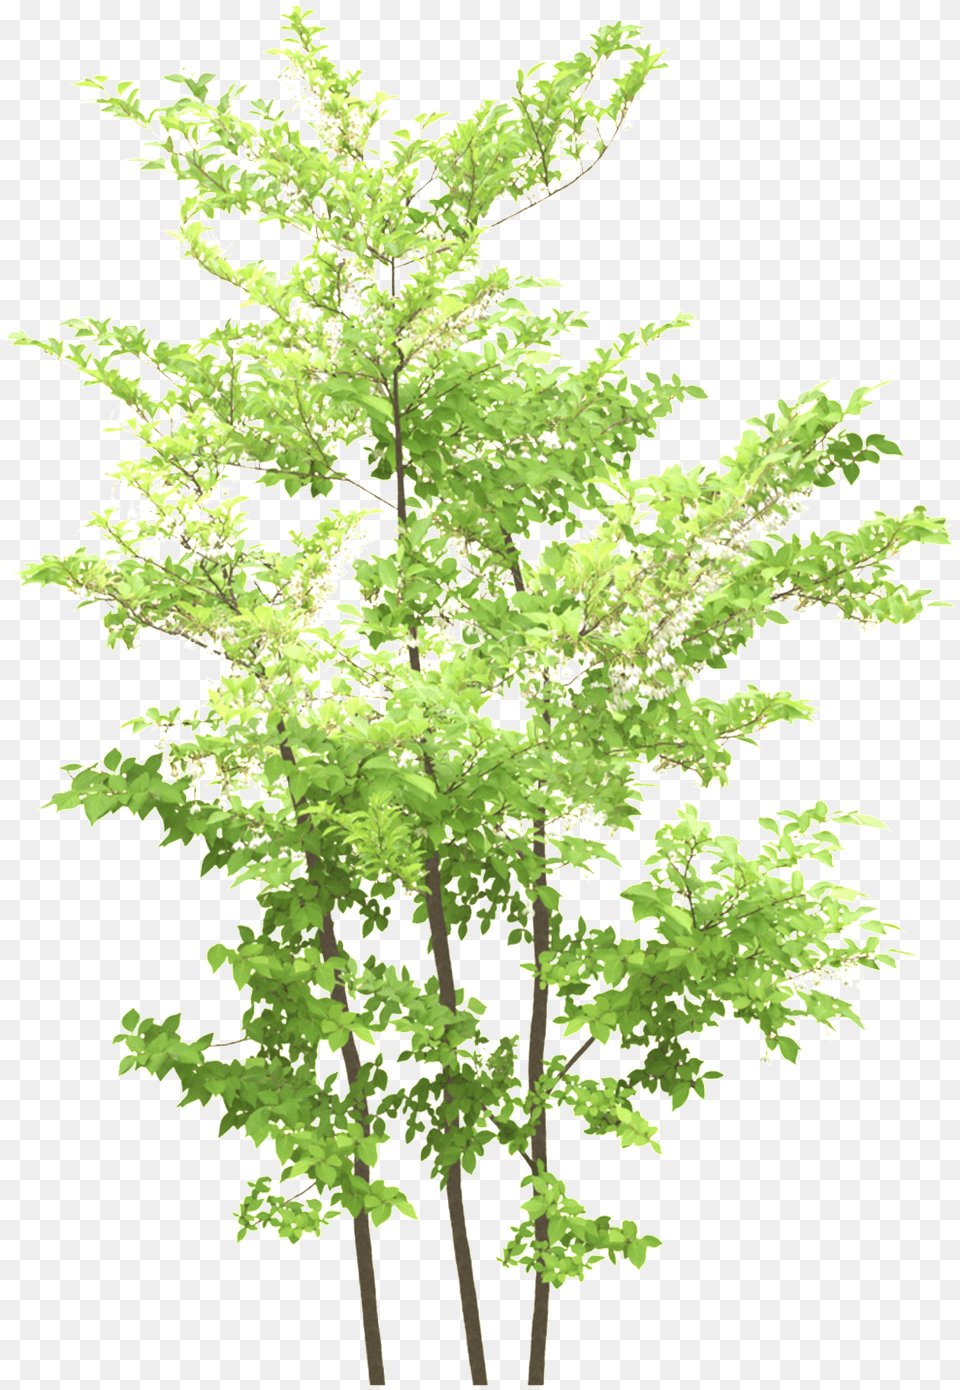 Blue Flower Tree Transparent Portable Network Graphics, Green, Leaf, Plant, Fern Png